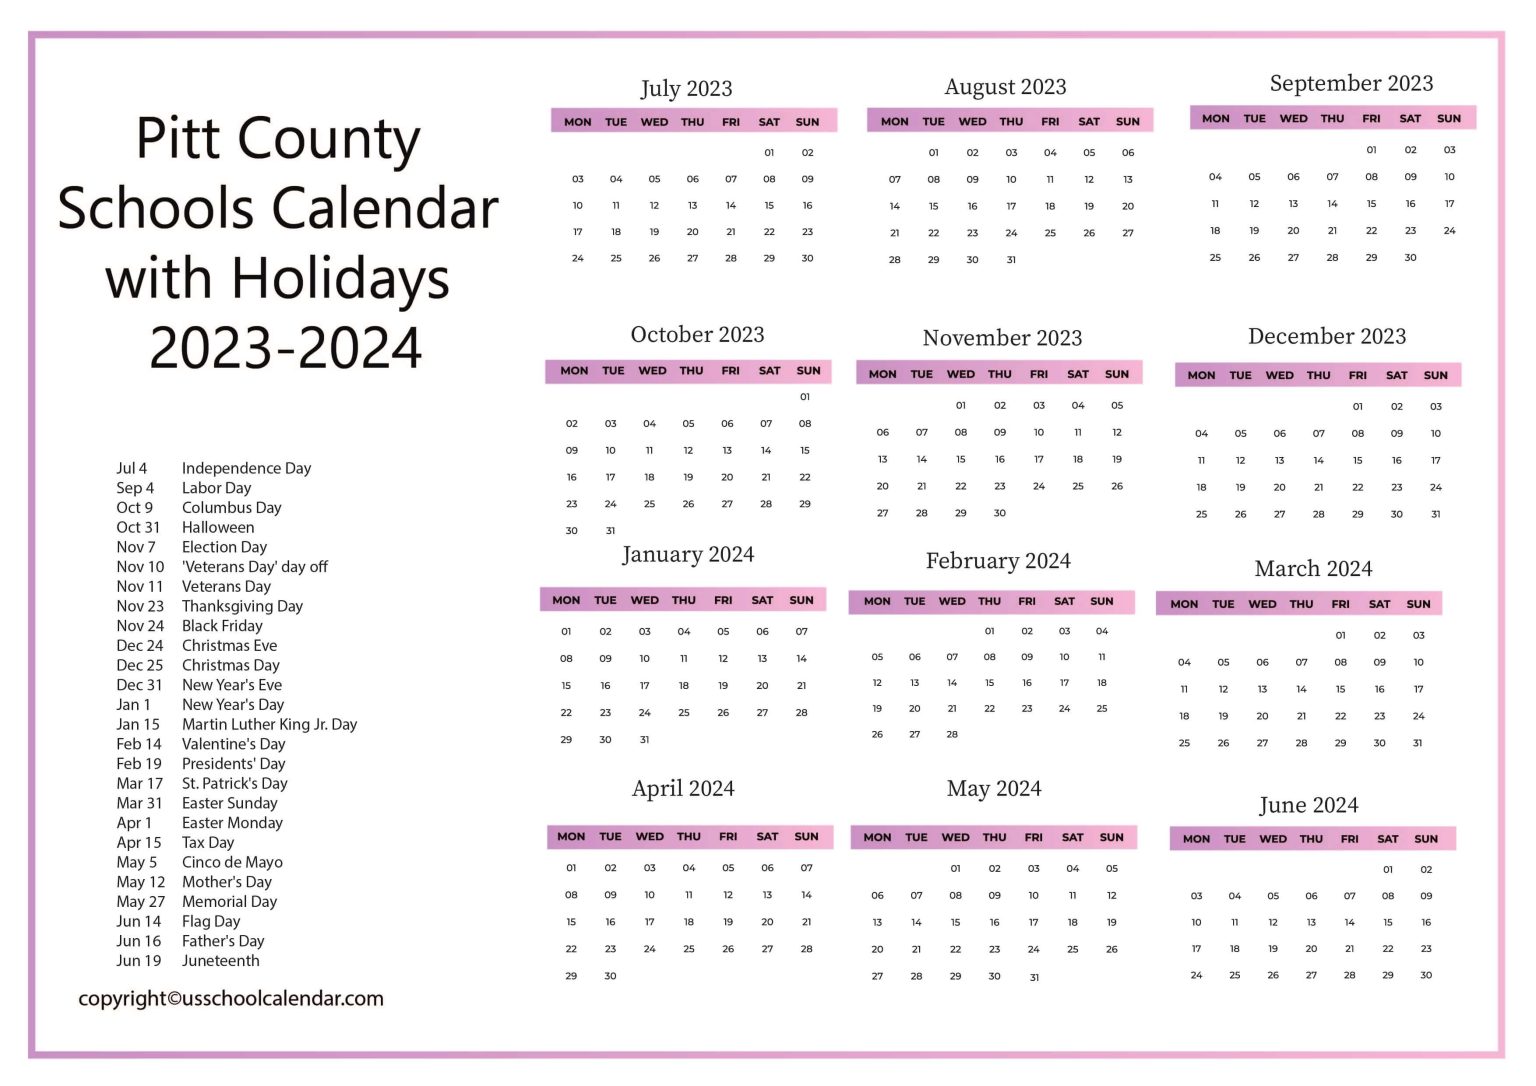 pitt-county-schools-calendar-with-holidays-2023-2024